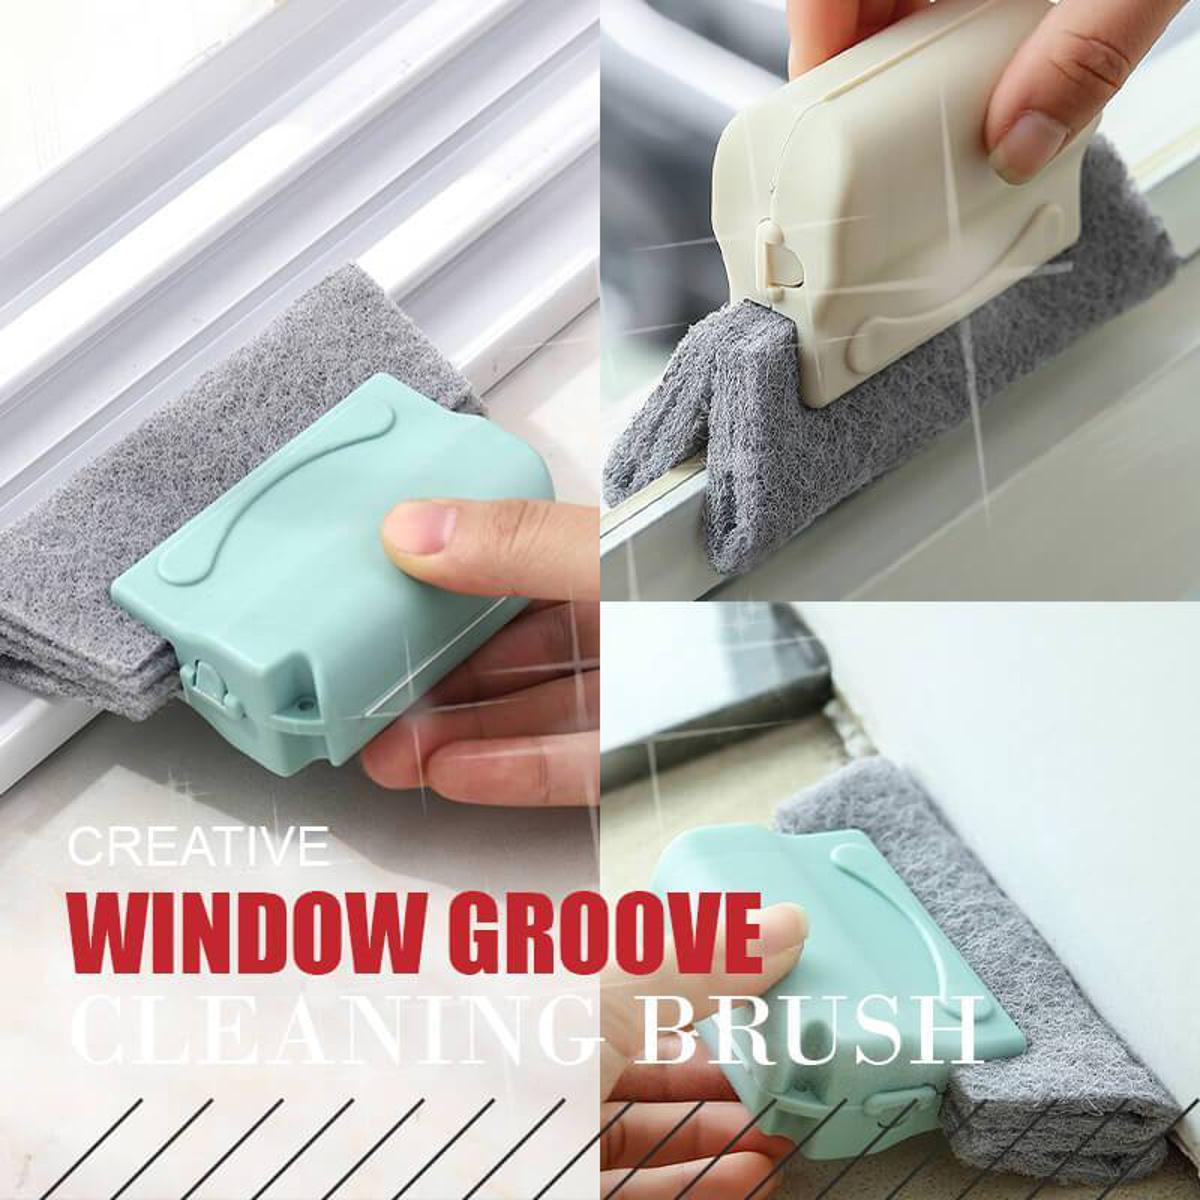 Magic Window Cleaning Brush Hand-held Crevice Gap Cleaner Tools Window  Groove Cleaning Brush